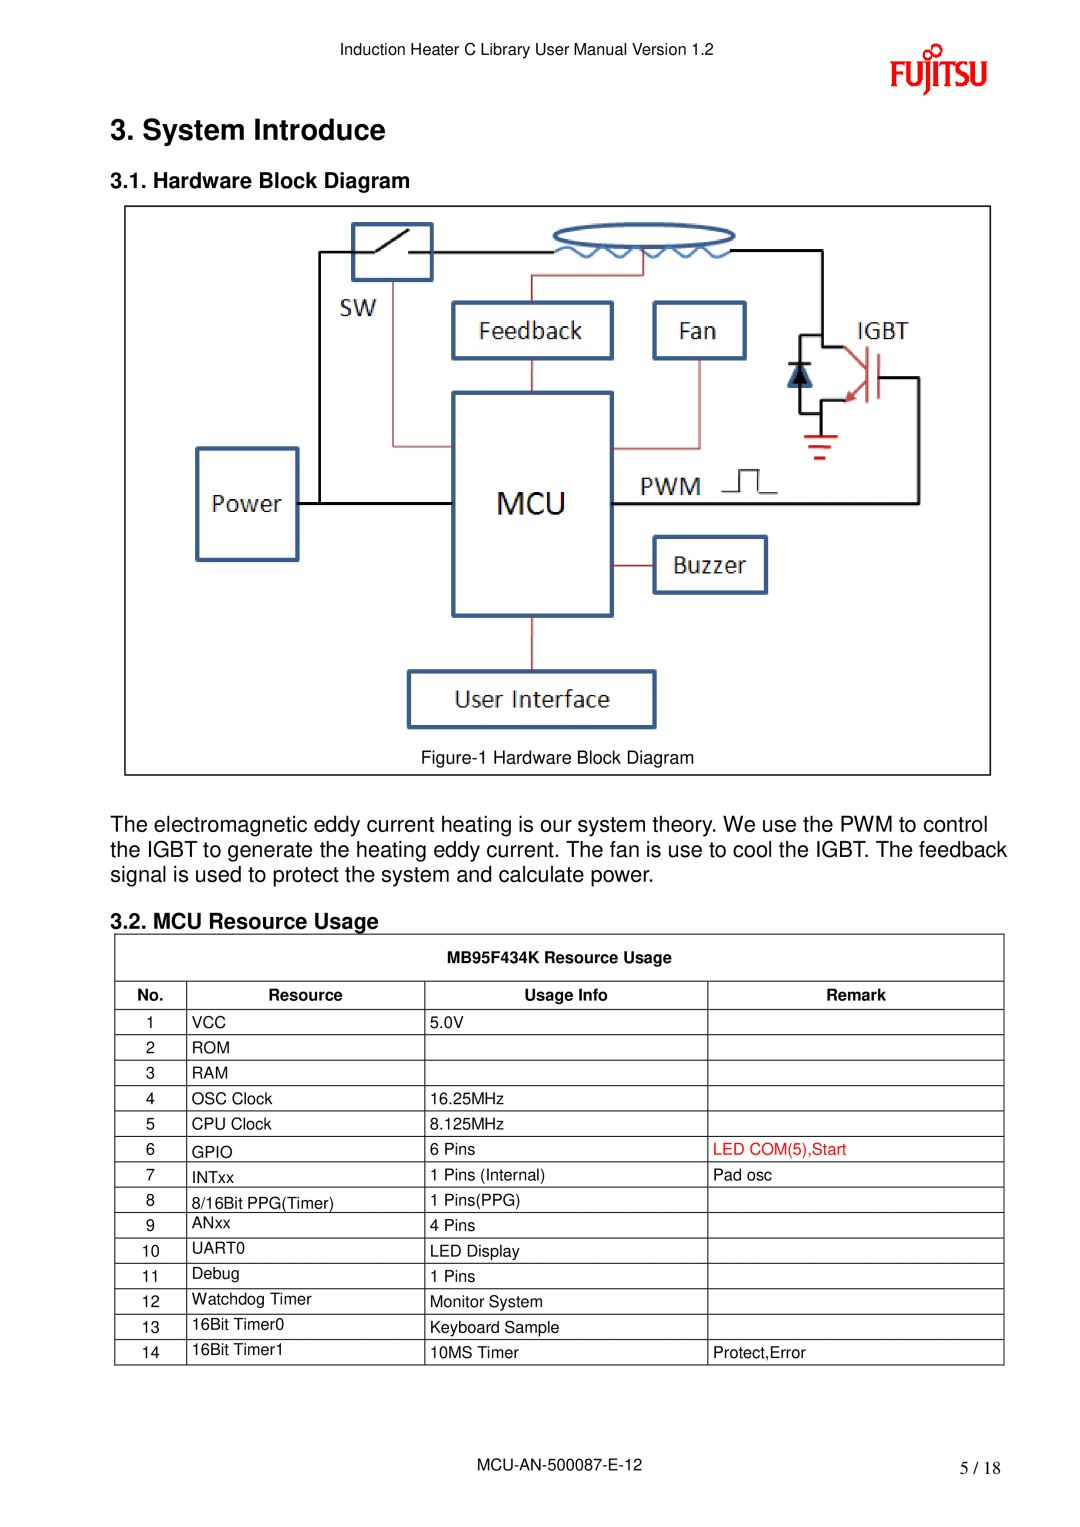 Fujitsu MB95F430 user manual System Introduce, Hardware Block Diagram, MCU Resource Usage 